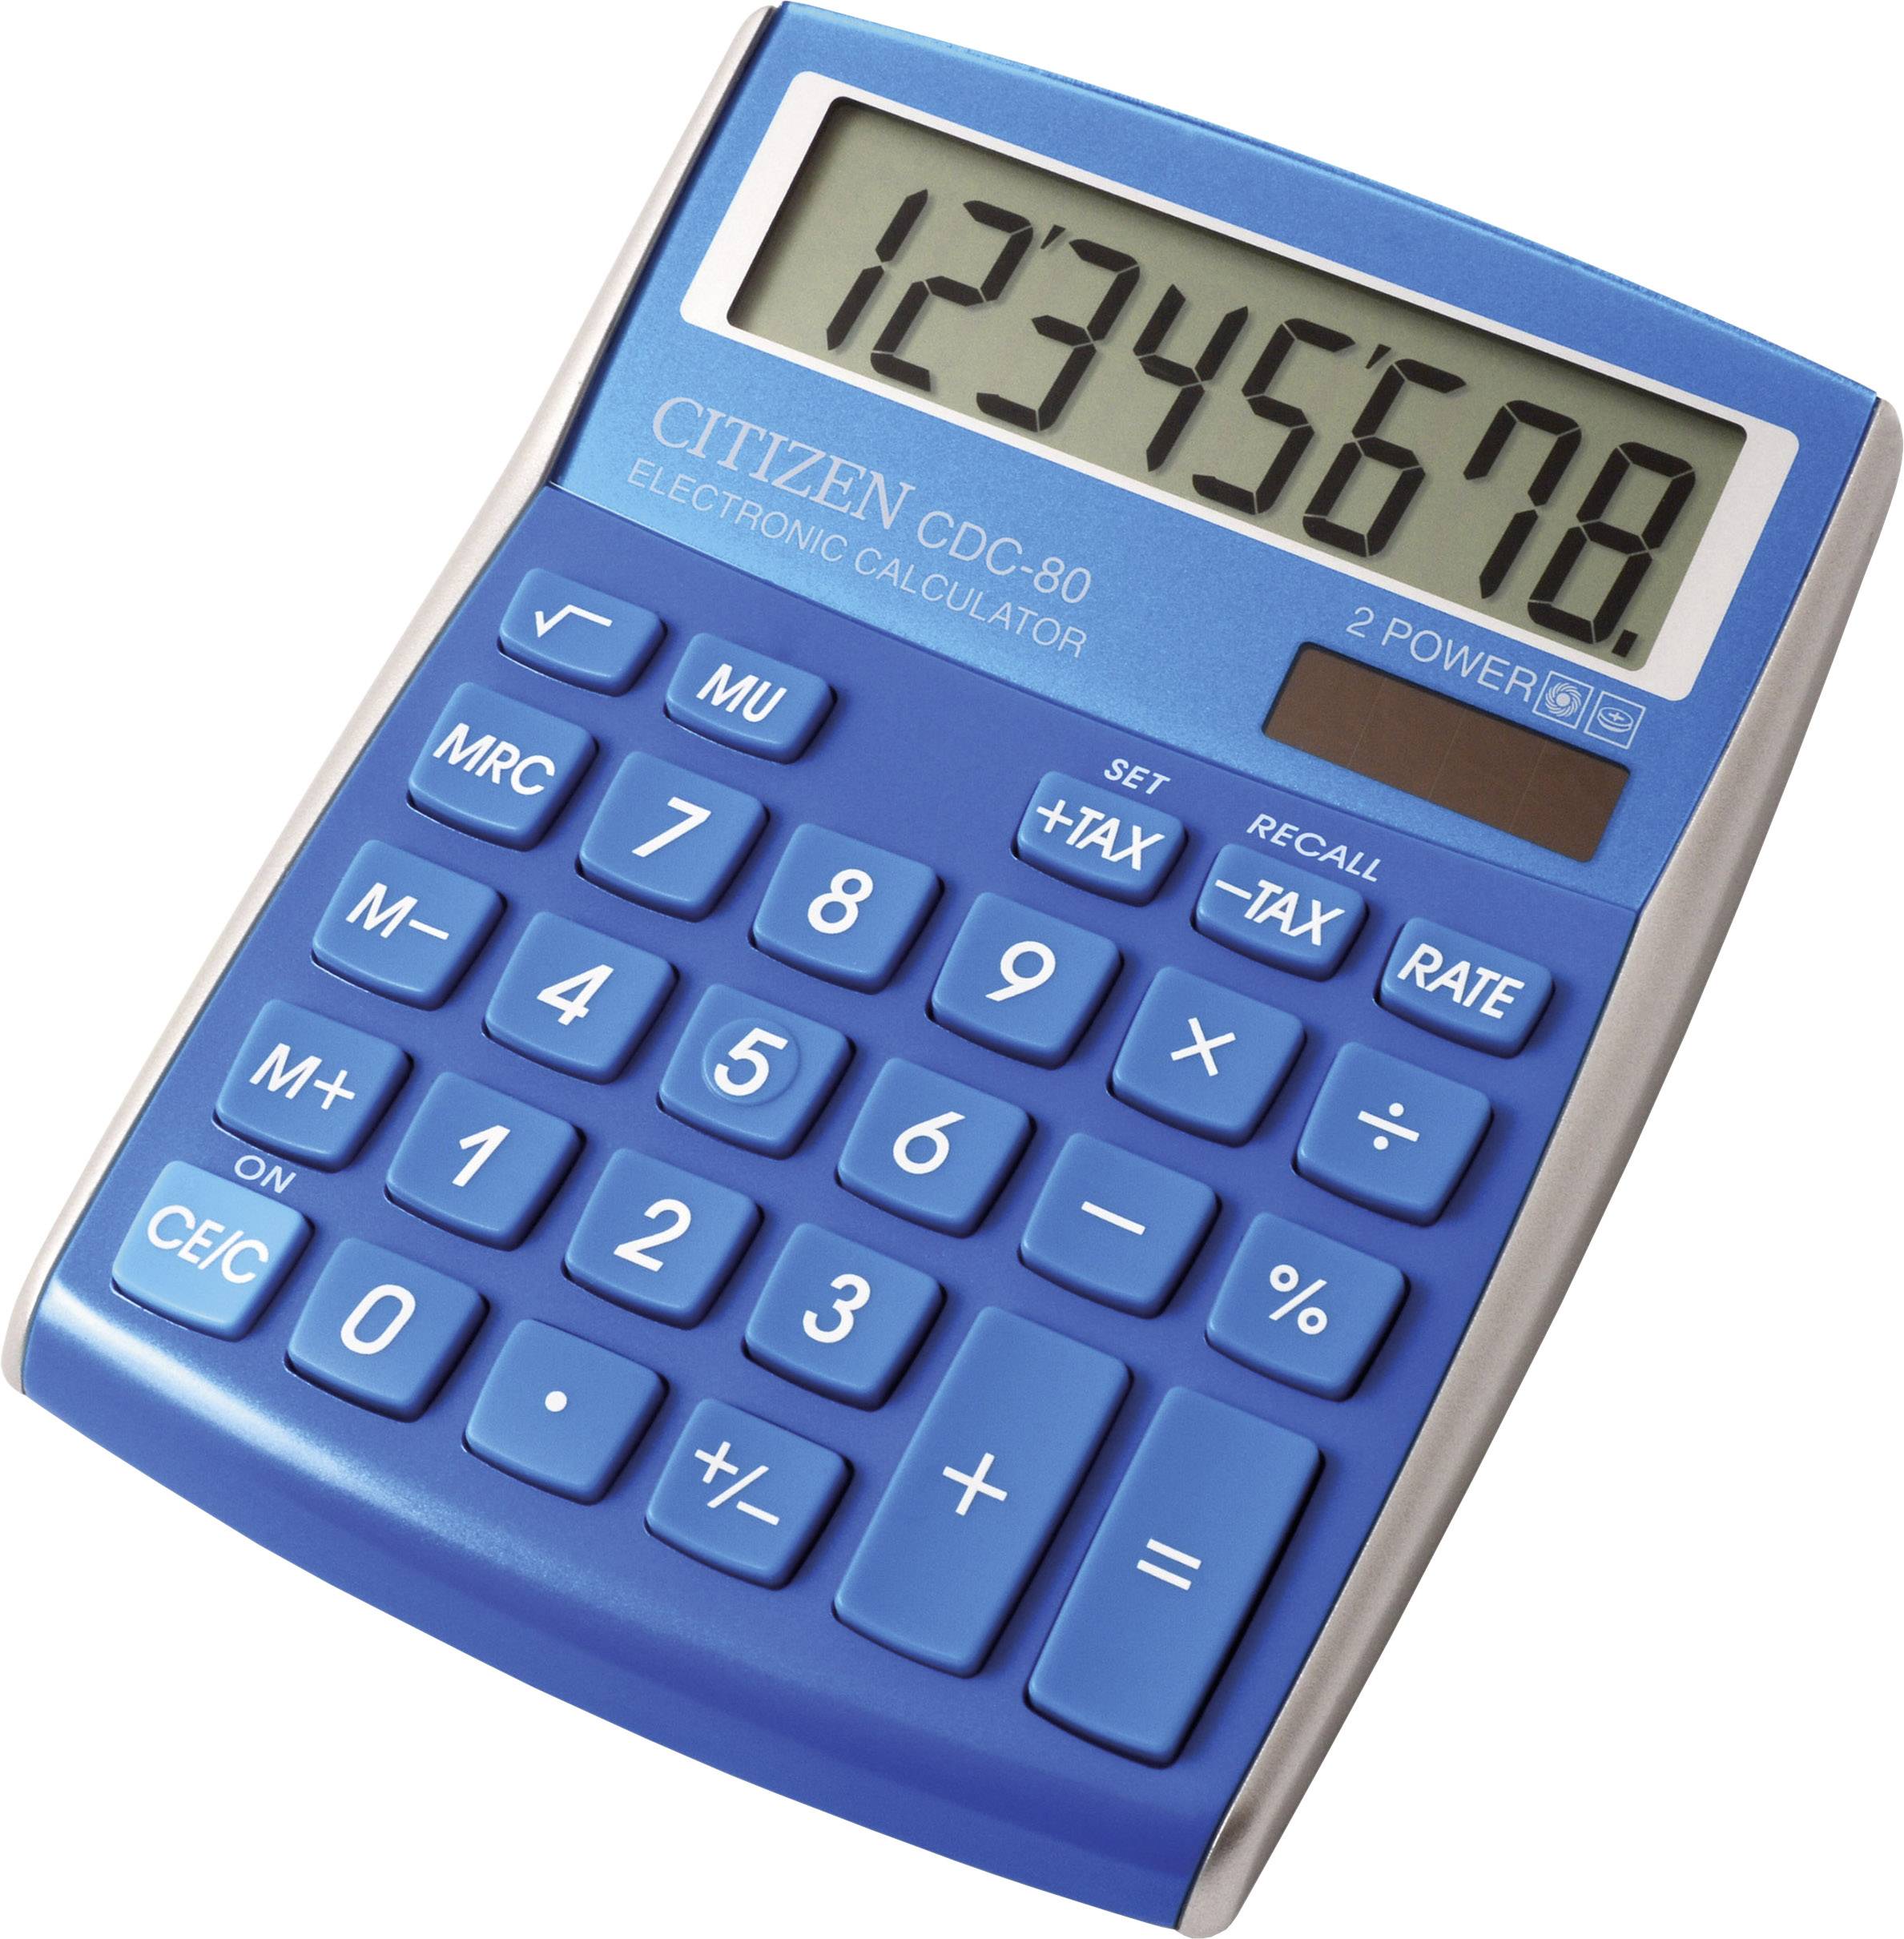 Calculator. Casio fx92. Калькулятор. Калькулятор синий. Калькулятор новый.